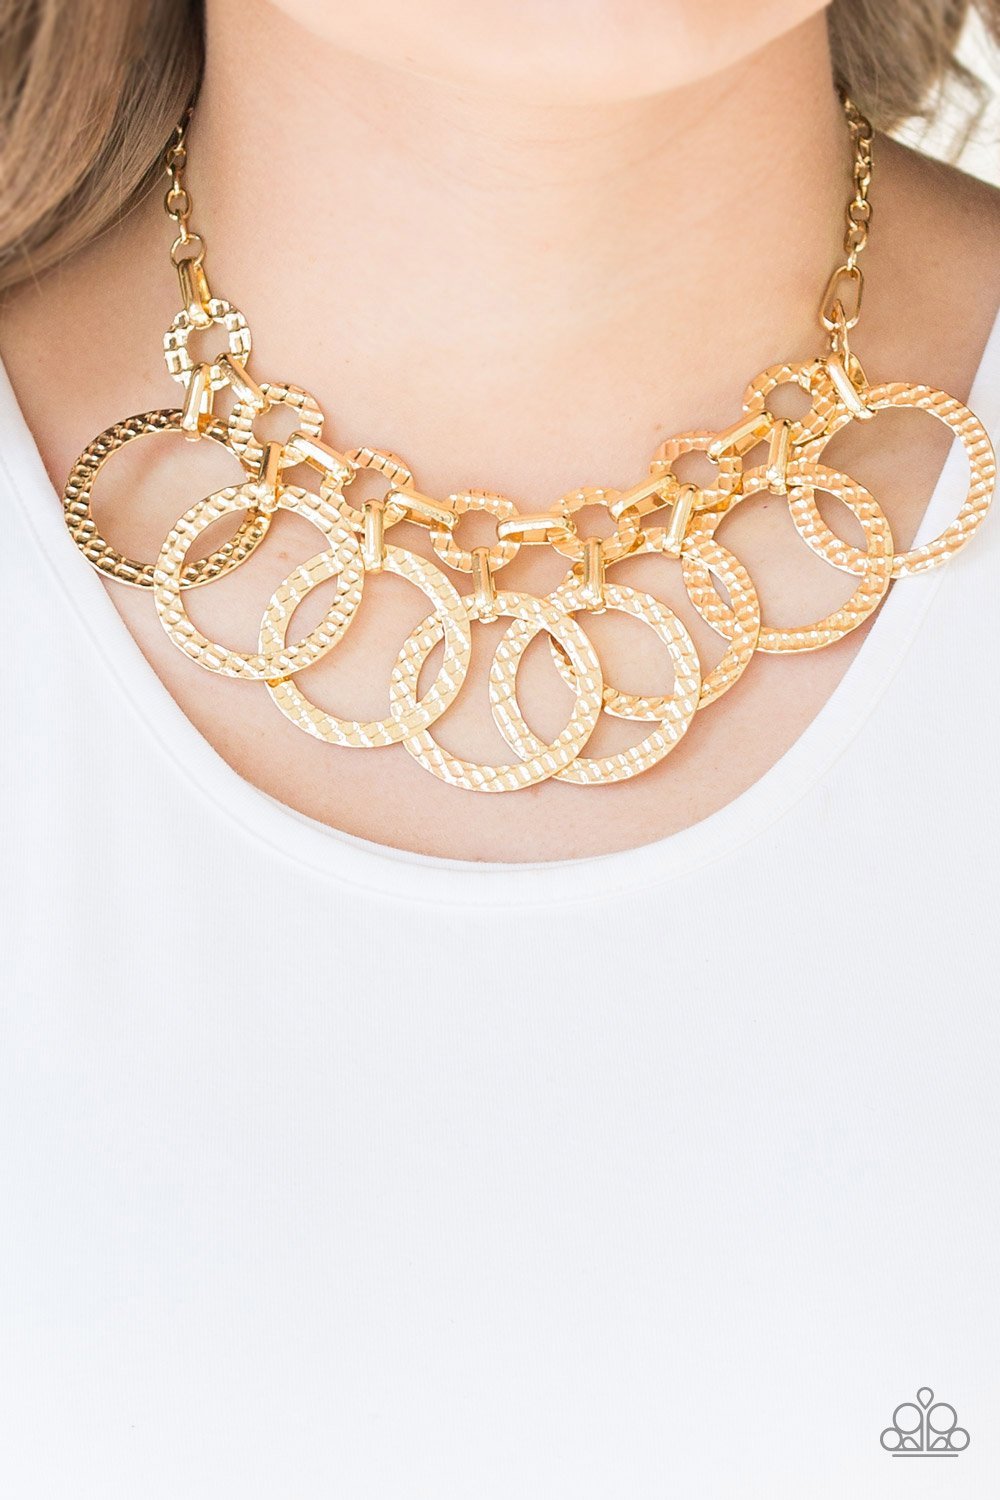 Paparazzi Accessories Jammin Jungle - Gold Necklaces - Lady T Accessories